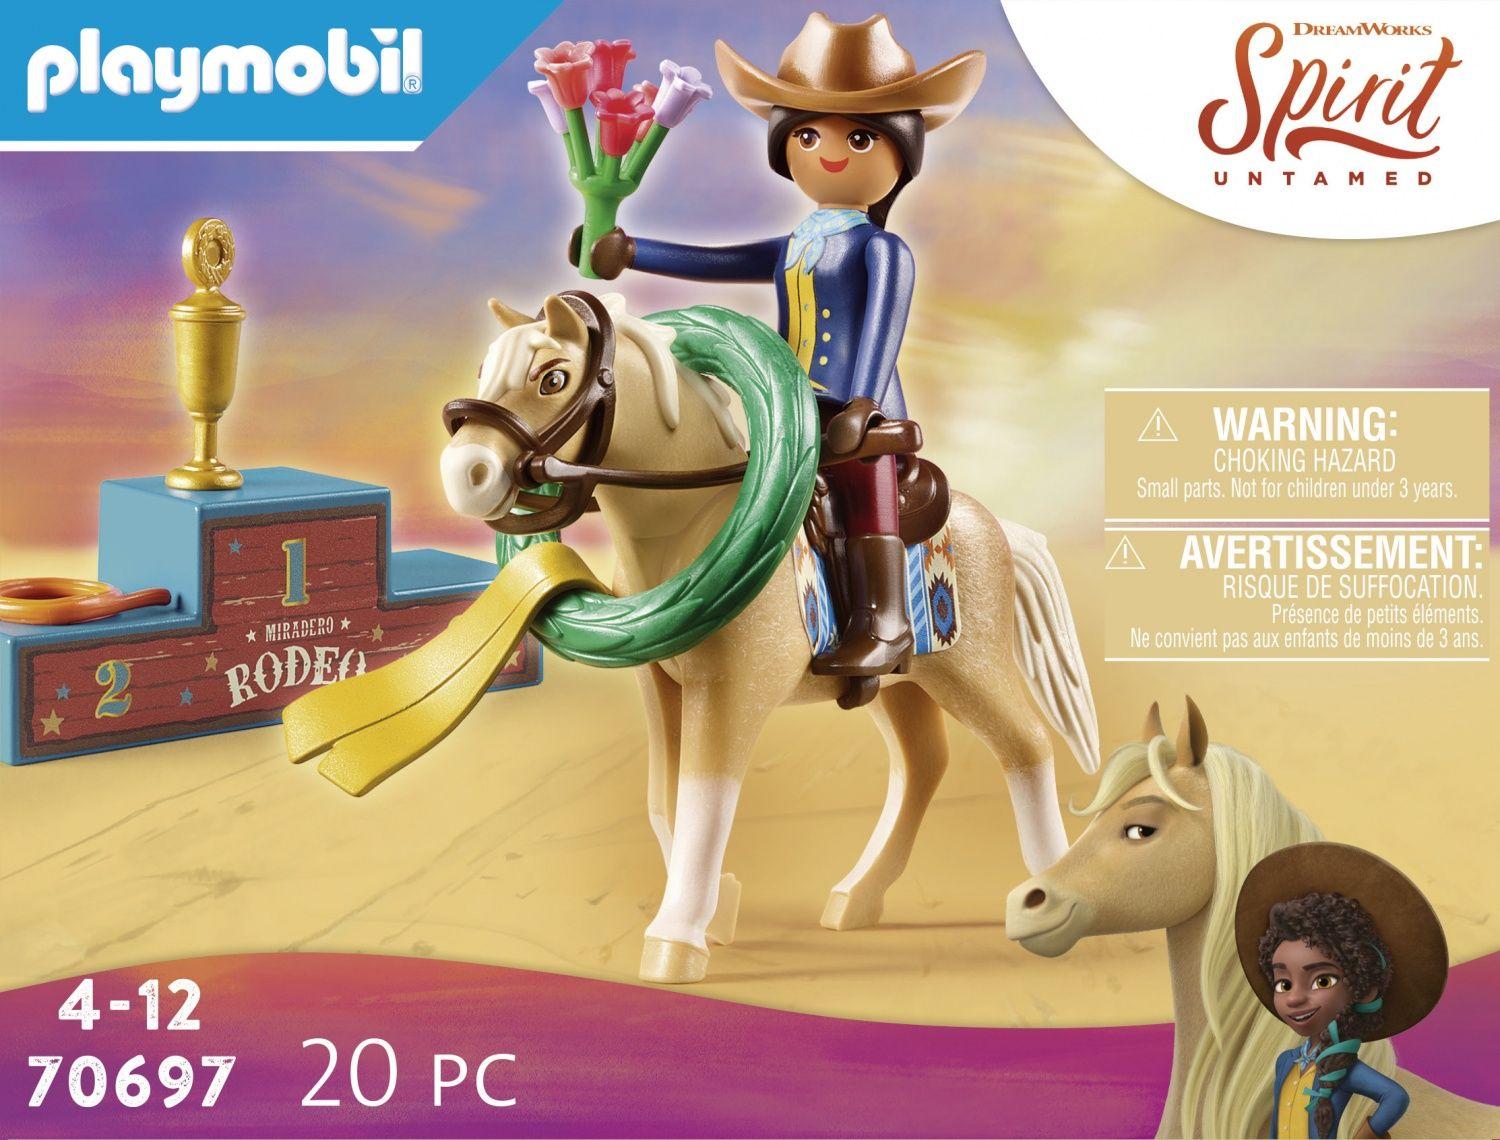 PLAYMOBIL Spirit Boutique d'équitation de Miradero - 70695